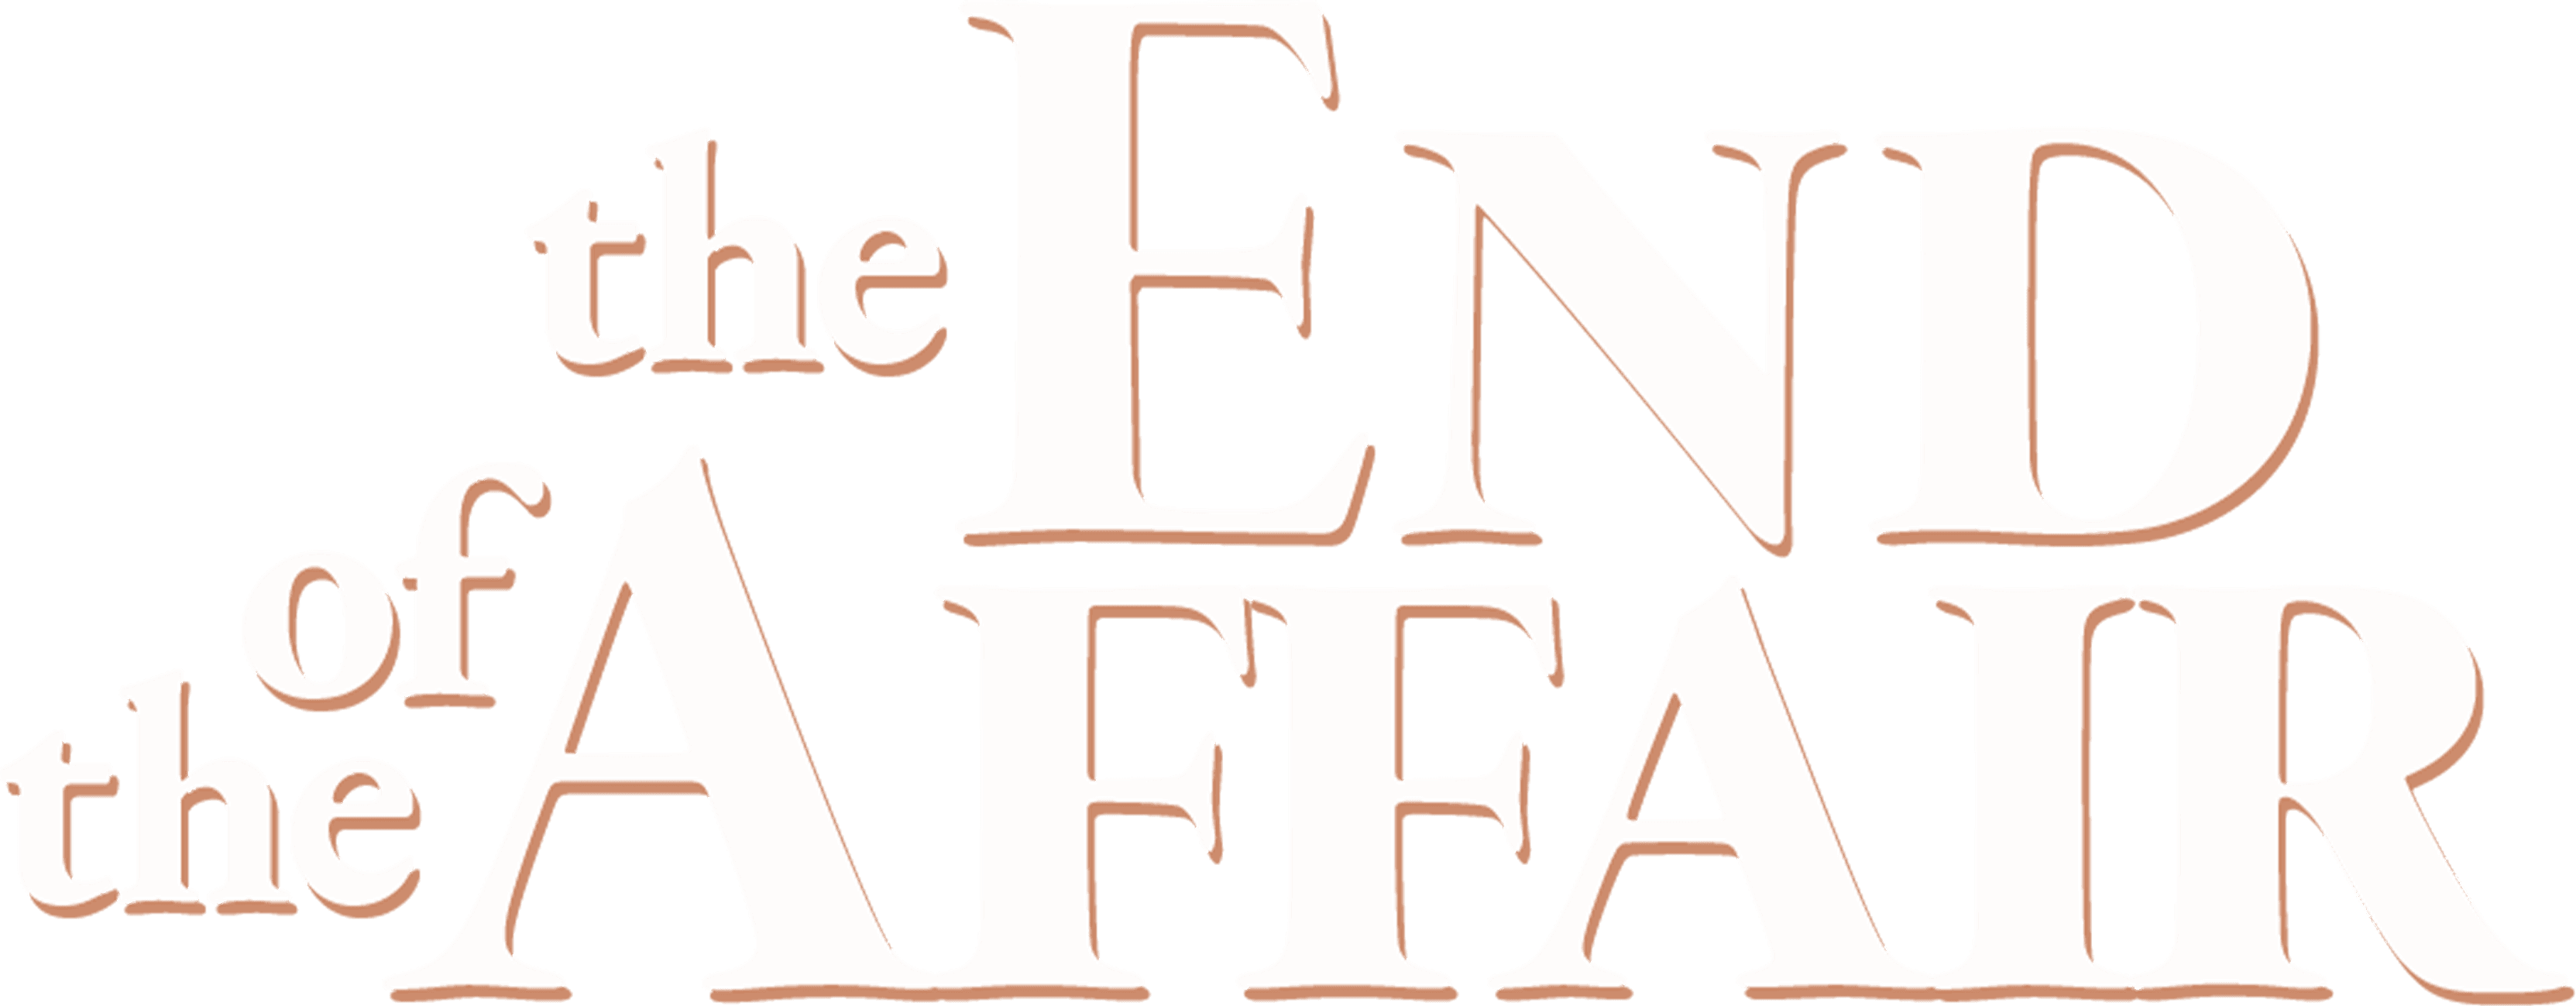 The End of the Affair logo